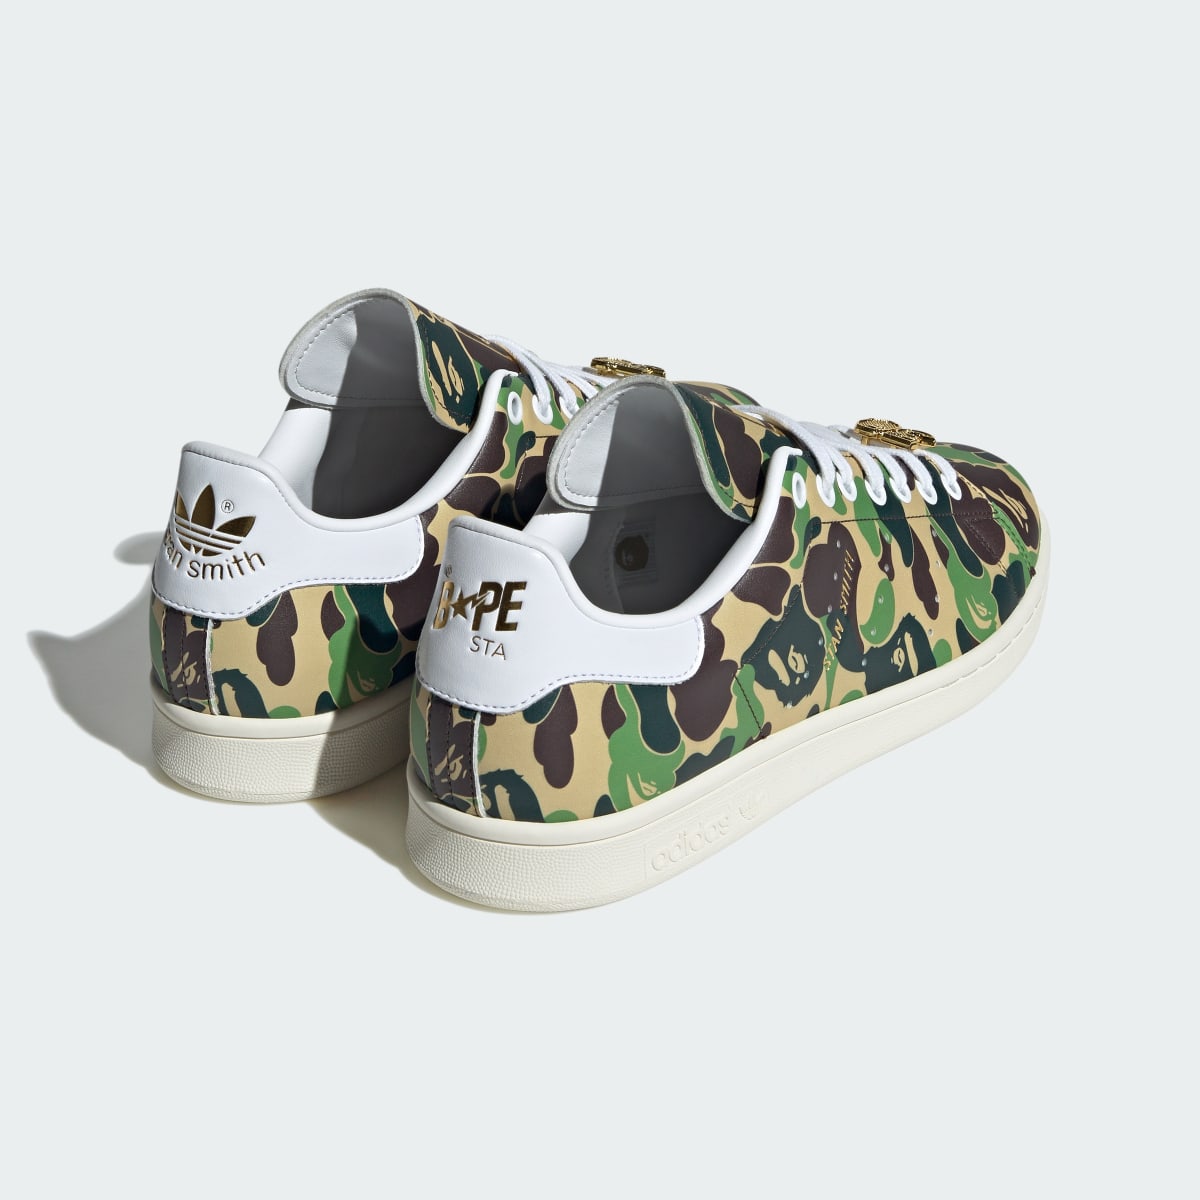 Adidas Stan Smith x Bape Shoes. 5